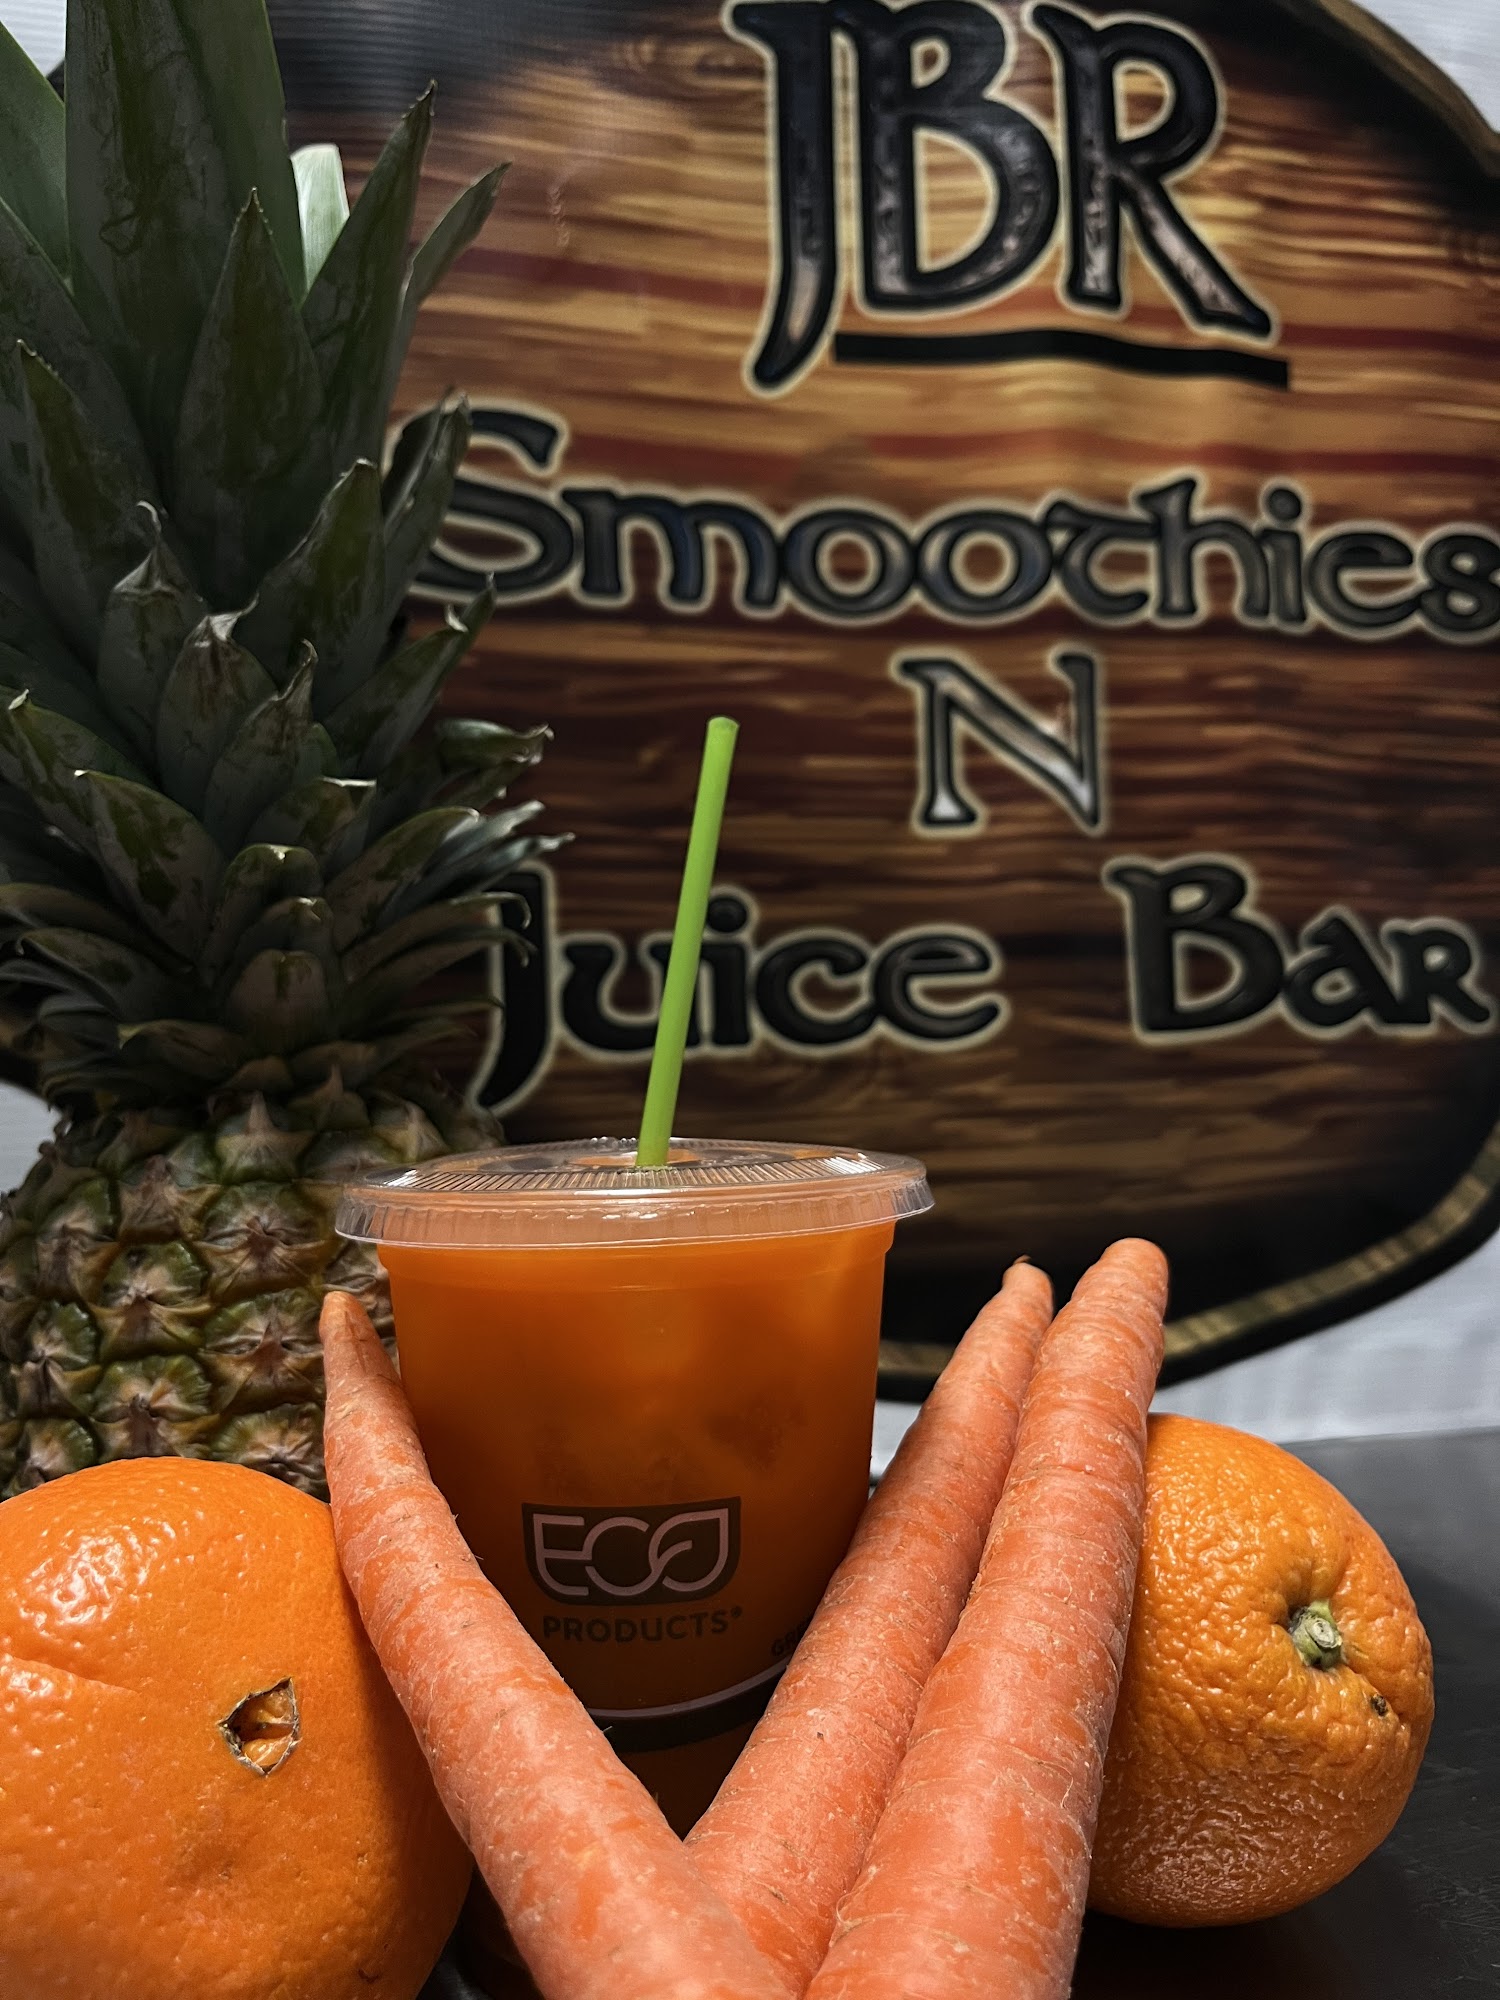 JBR Smoothie and Juice Bar